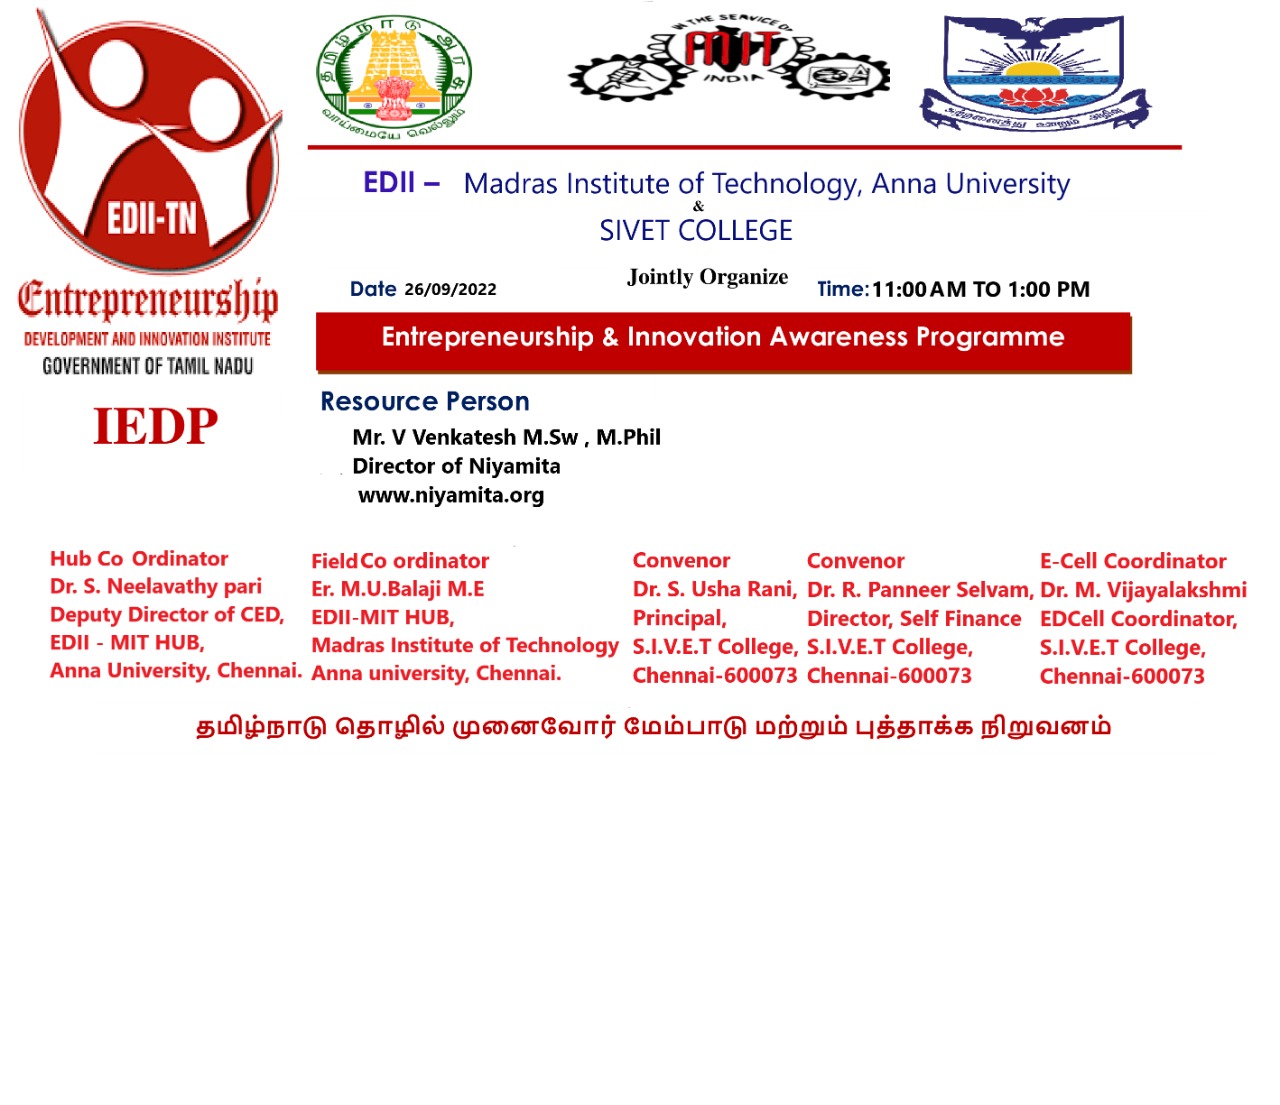 Enterpreuner & Innivation Awareness programme Conducted by IEDP, Govt of TN in joun association with MIT, Anna UNiversity & SIVET College